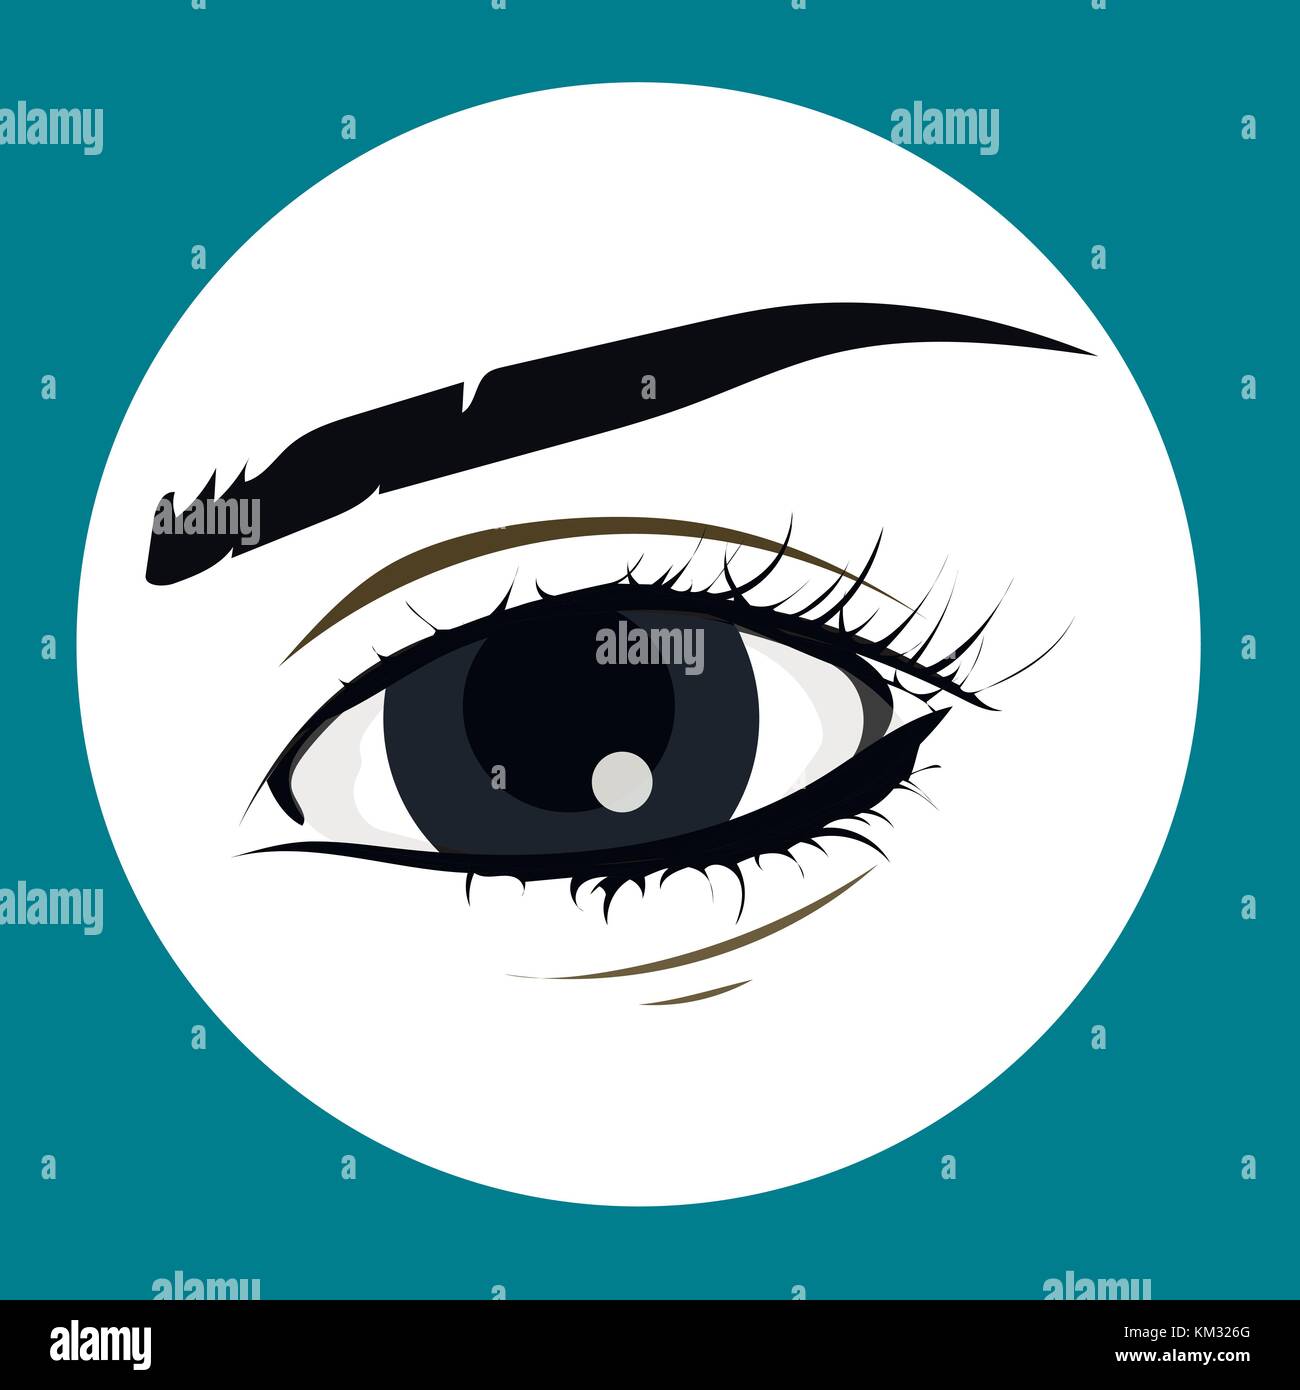 Eye on white background. Eyes art. Woman eye. The eye logo. Eyes art. Human eye close up - vector. Stock Vector